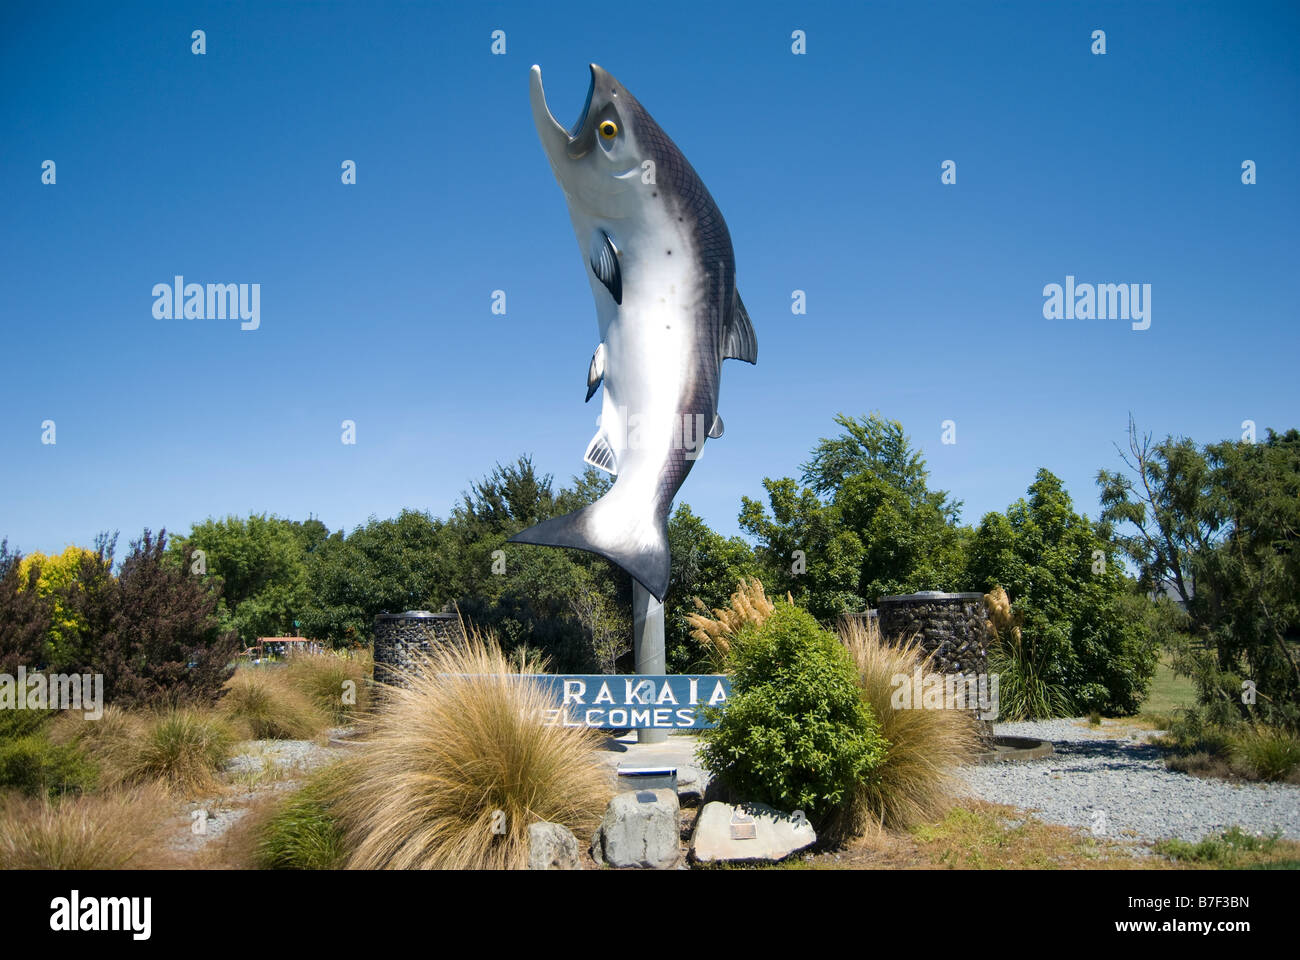 The 'Big Salmon' welcome sign, Rakaia, Ashburton District, Canterbury, New Zealand Stock Photo